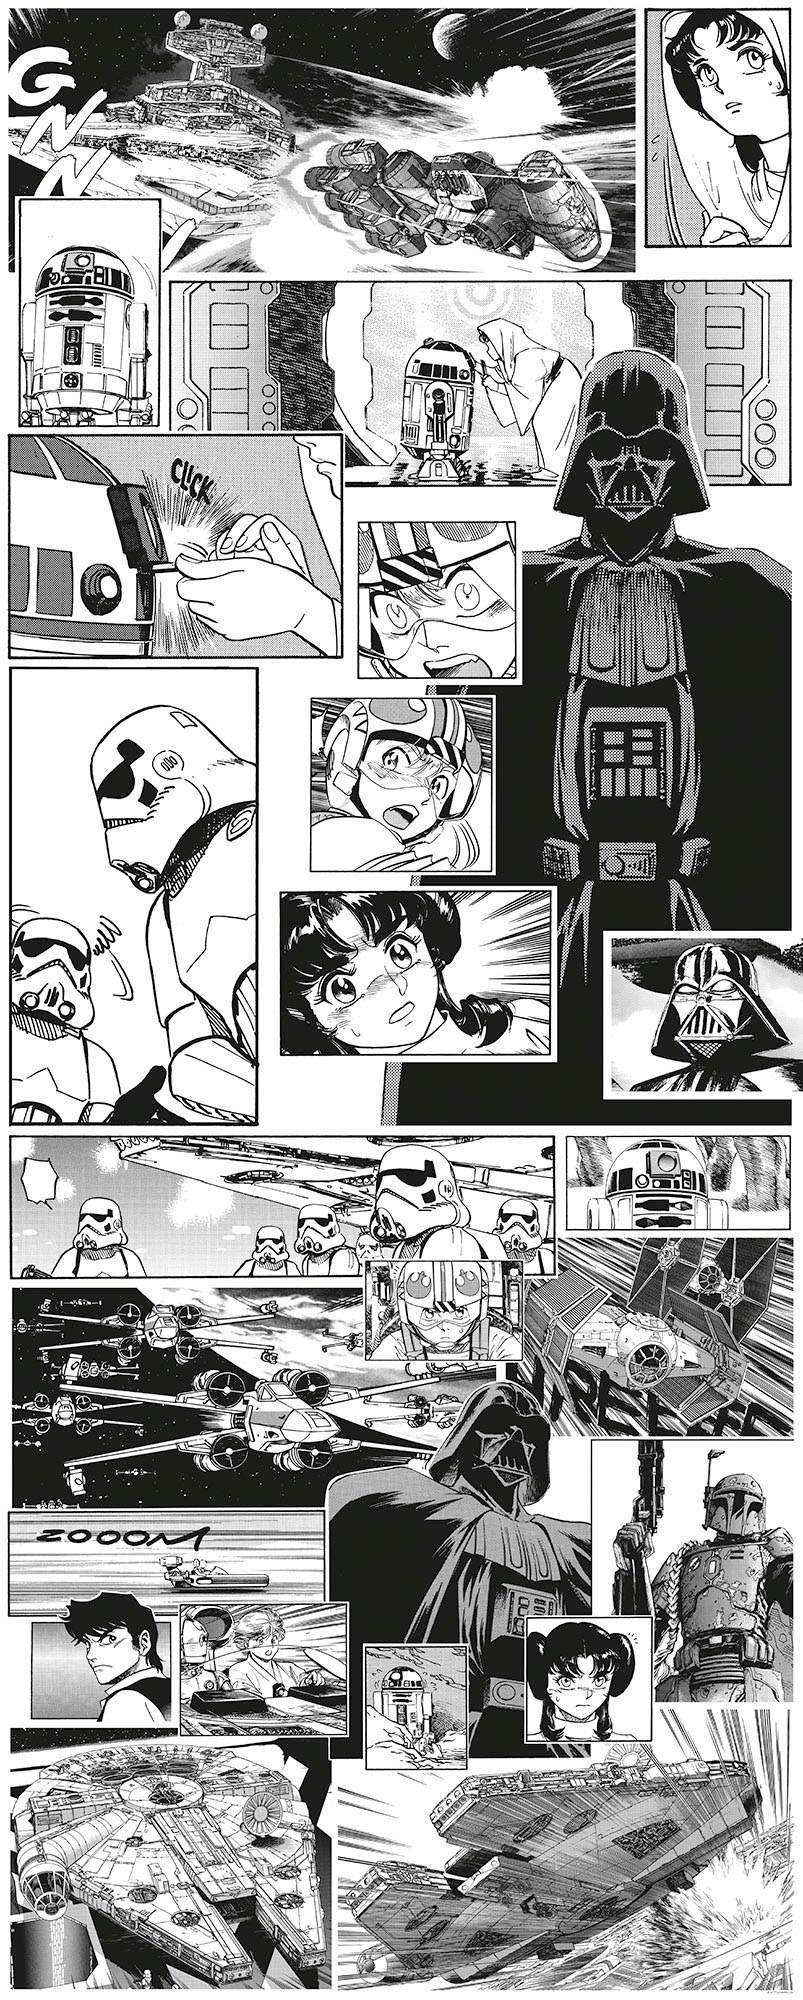 Komar Fototapete »Vlies Fototapete - Star Wars Manga Madness - Größe 100 x 250 cm«, bedruckt